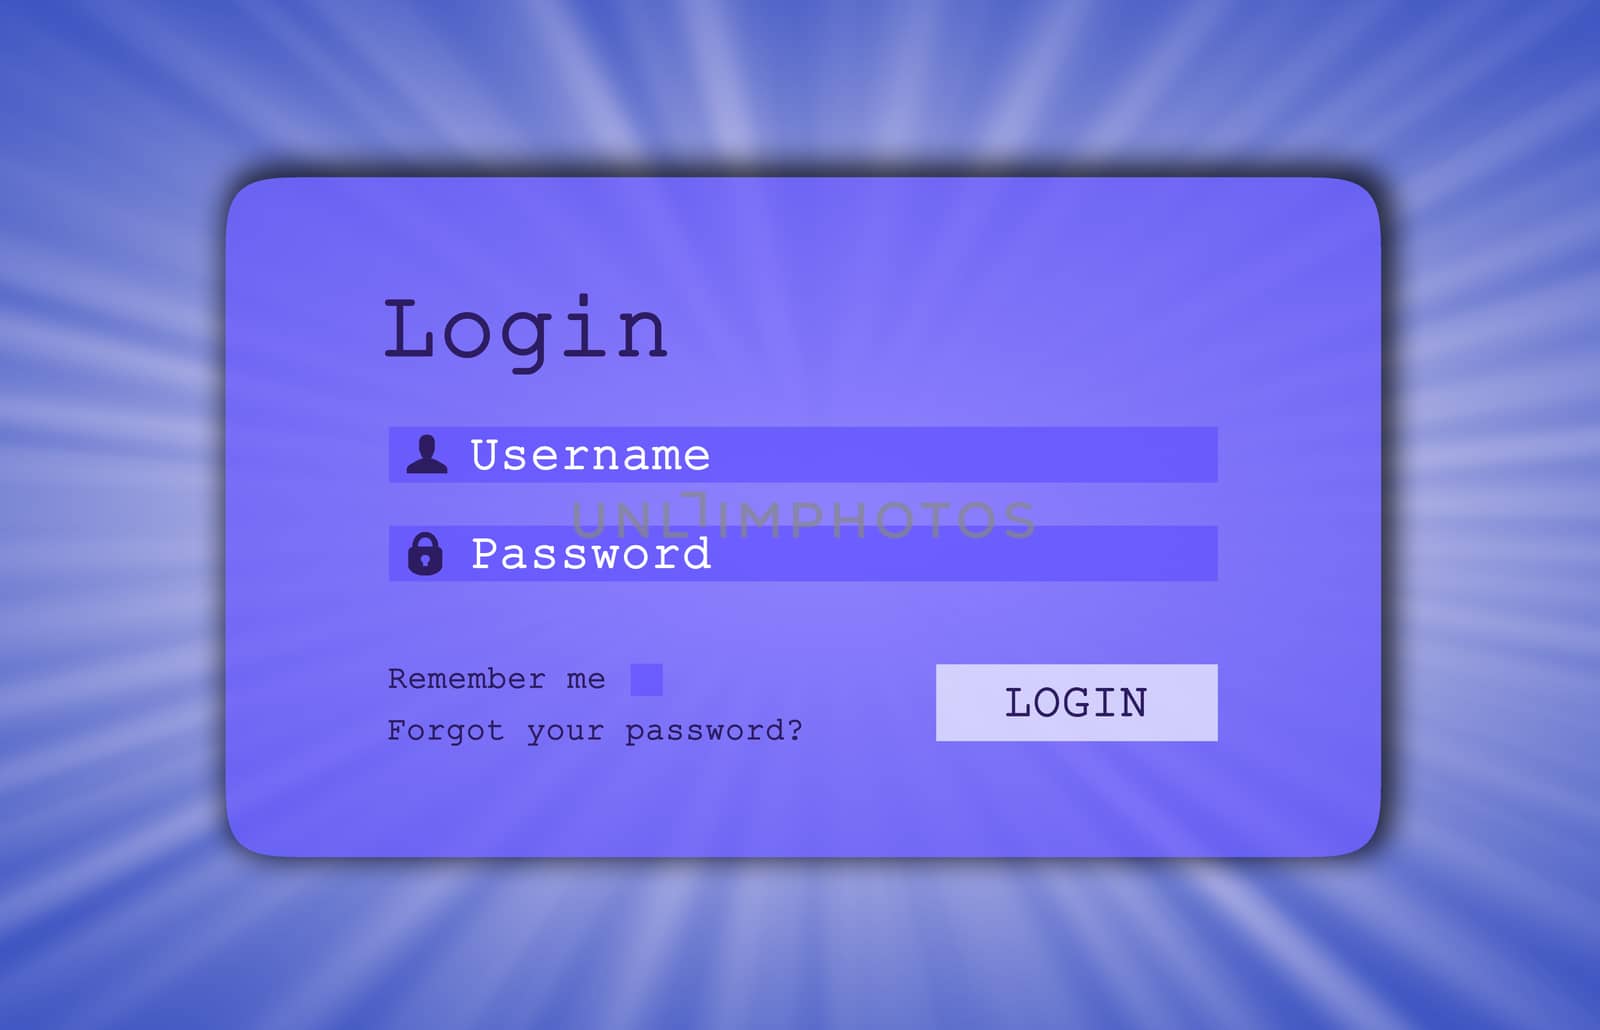 Login interface - username and password, starburst background, blue